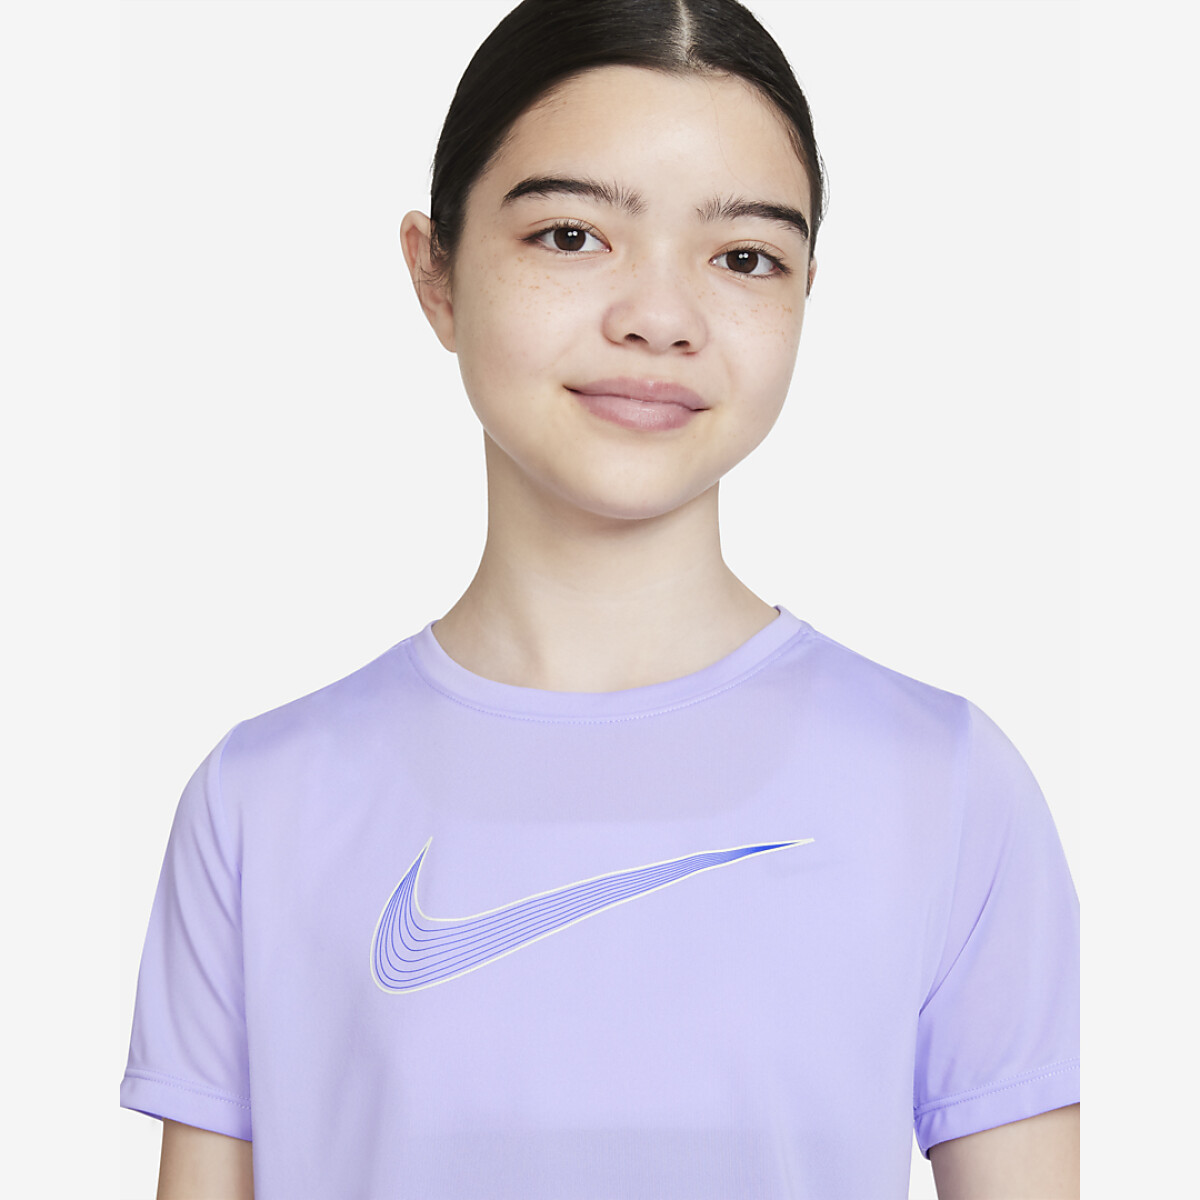 Remera Nike Training Niño One - Color Único 